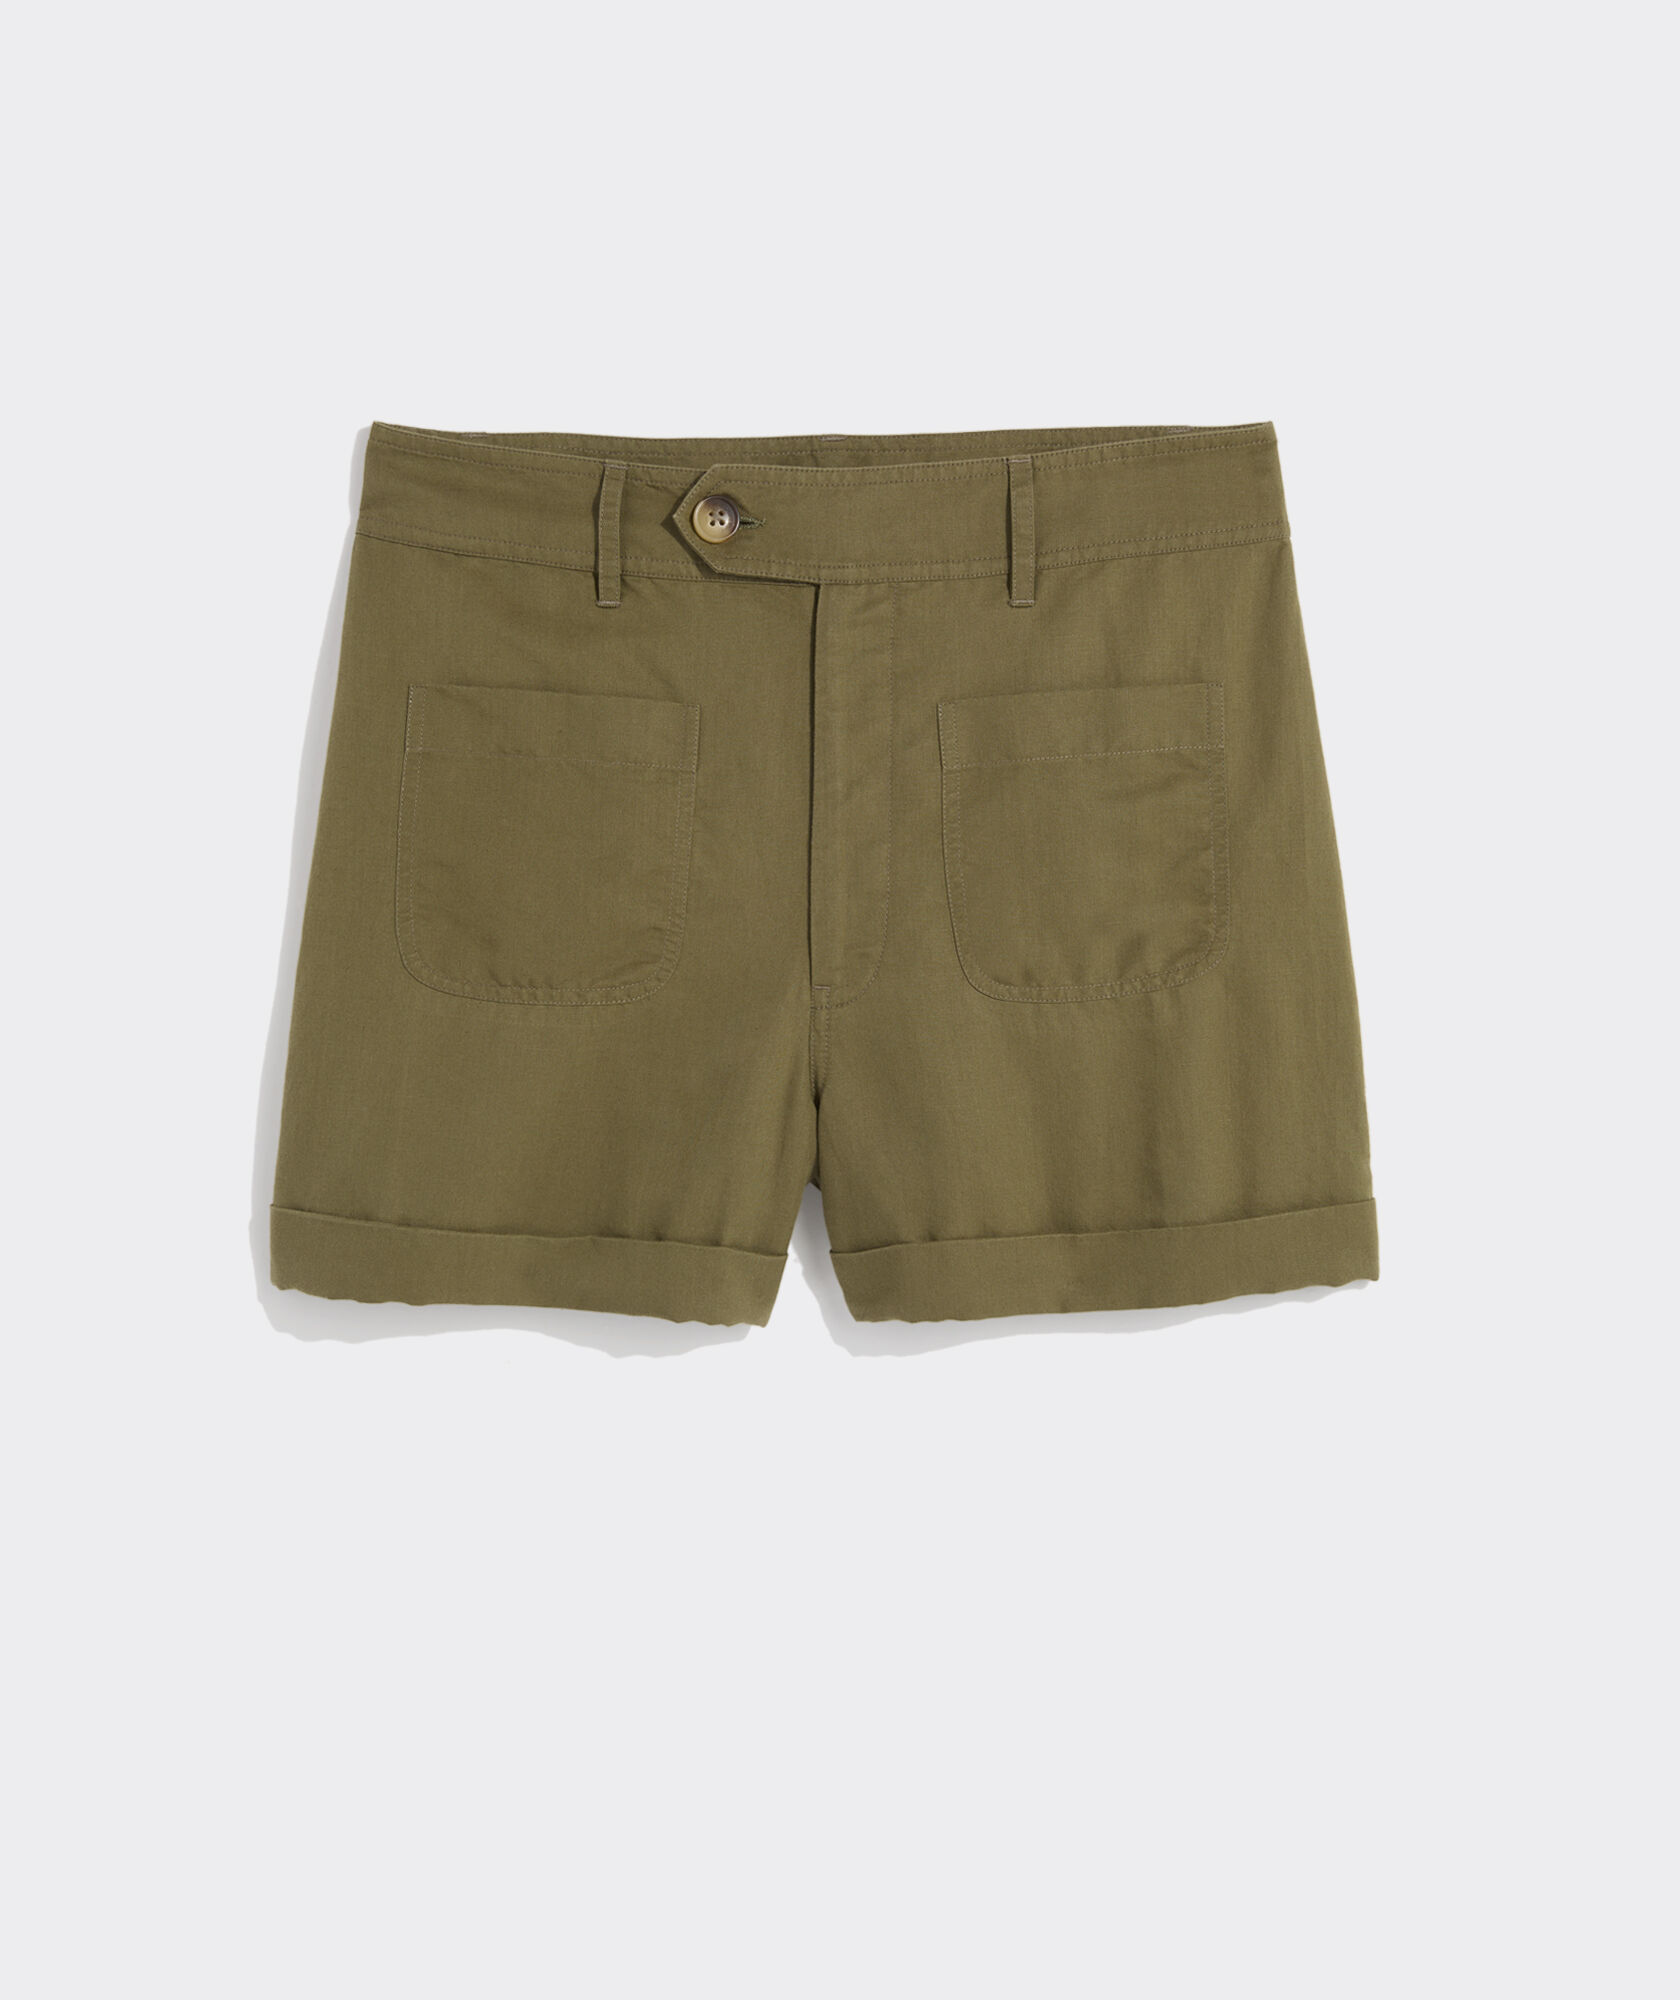 3 Inch Patch Pocket Linen Blend Shorts